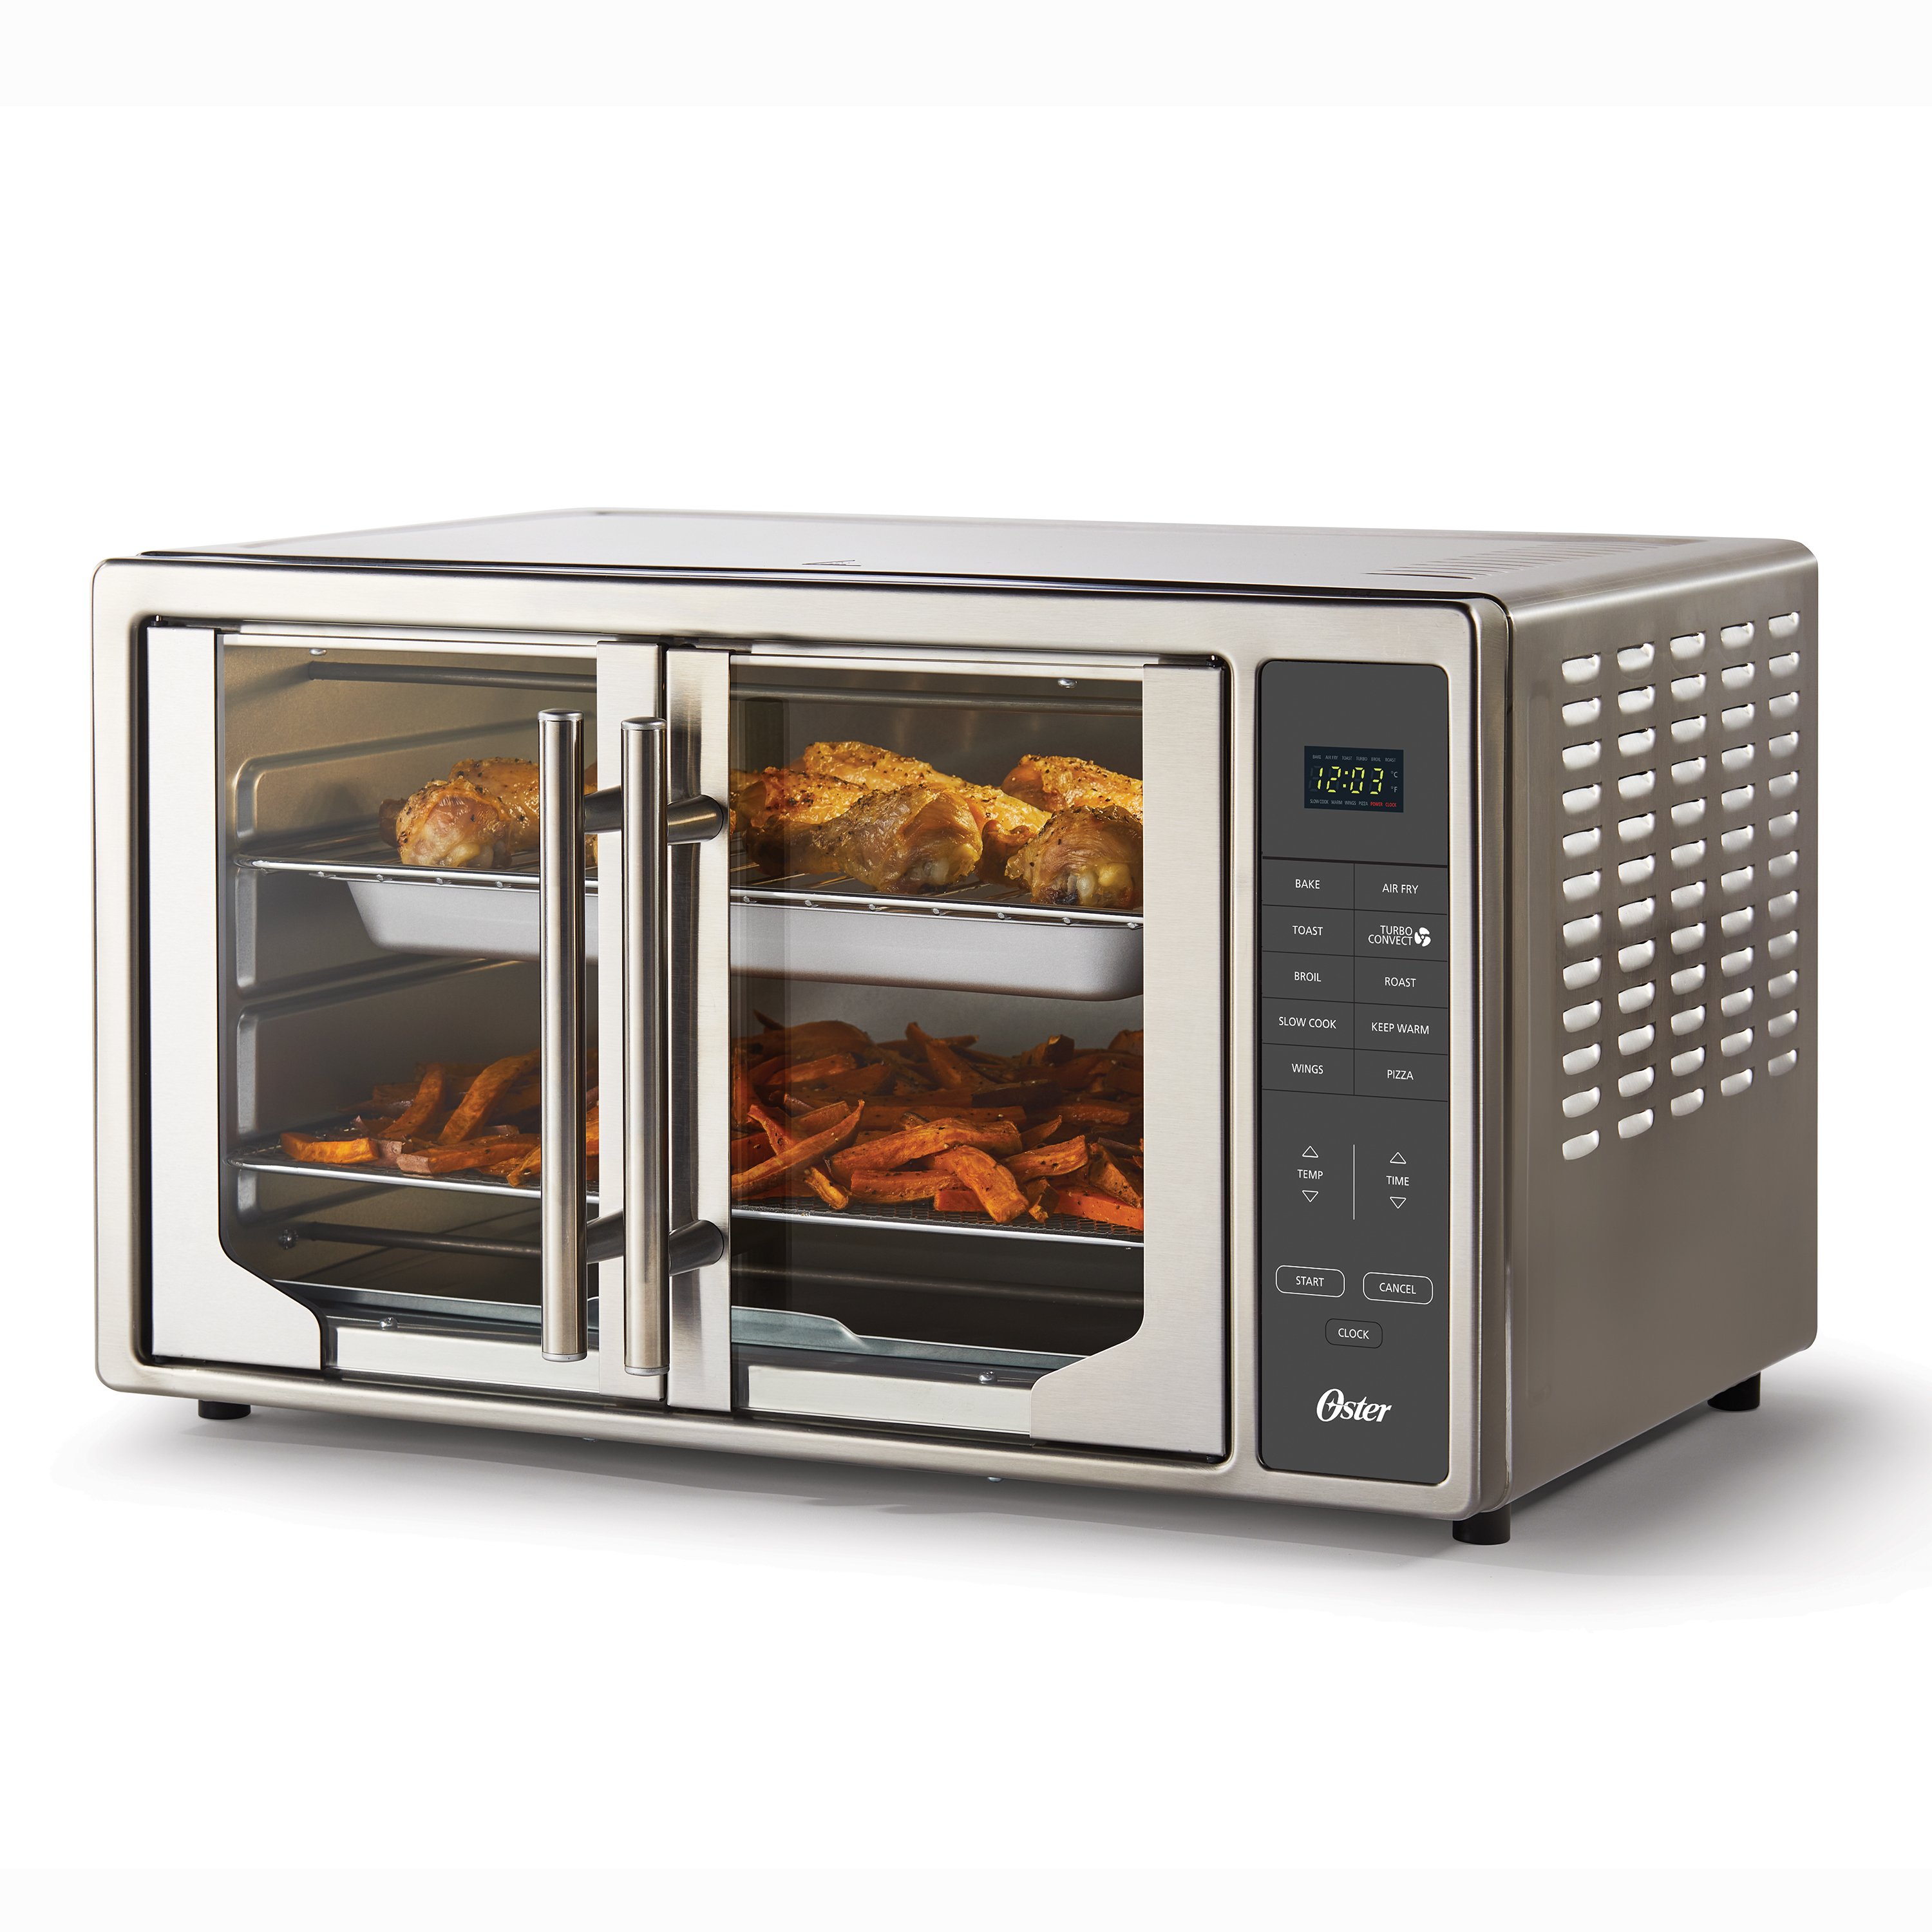 Details about   Oven Toaster Baking Broil 4 Slice Black Kitchen Dishwasher Safe Rack And Pan NEW 